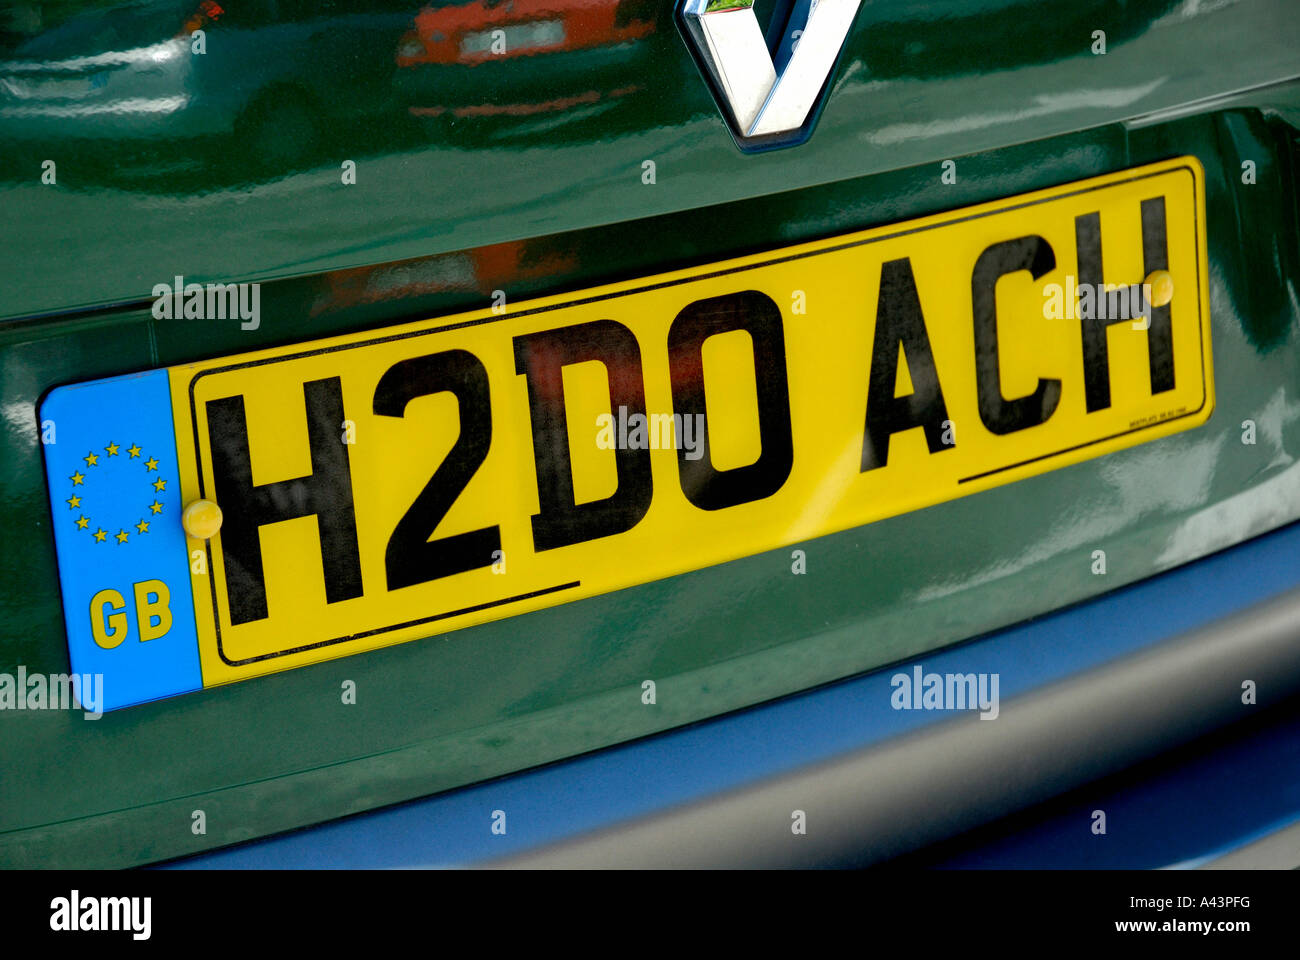 LICENSE CAR PLATE GB Stock Photo - Alamy